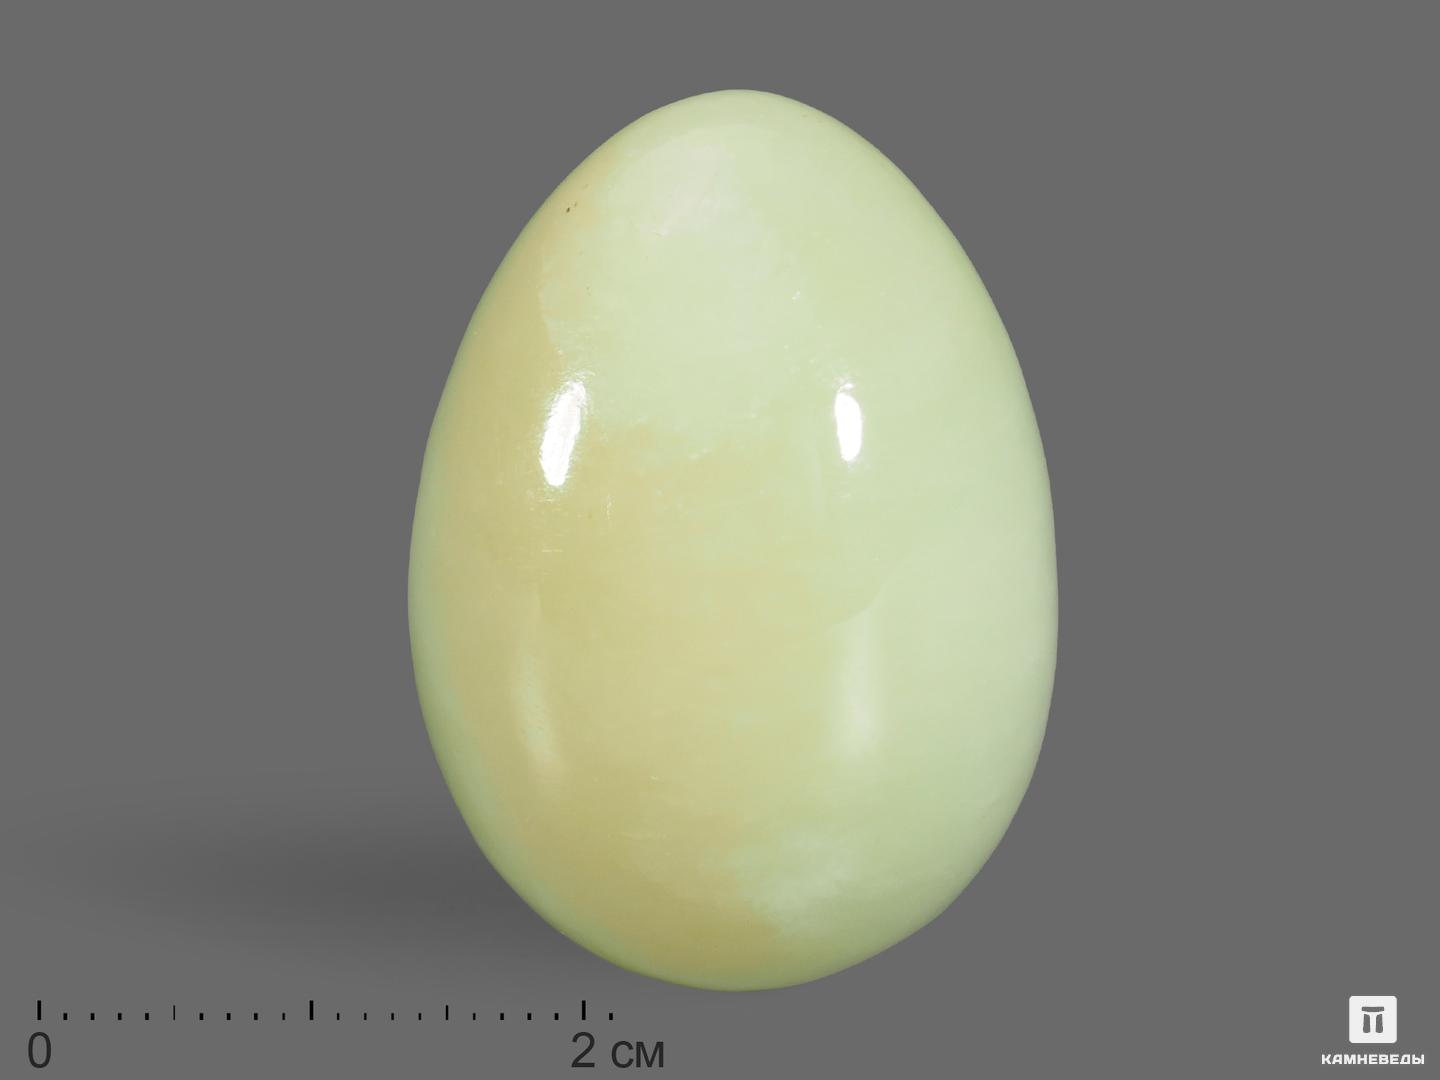 Яйцо из светлого нефрита, 3,5х2,5 см, 19057, фото 1